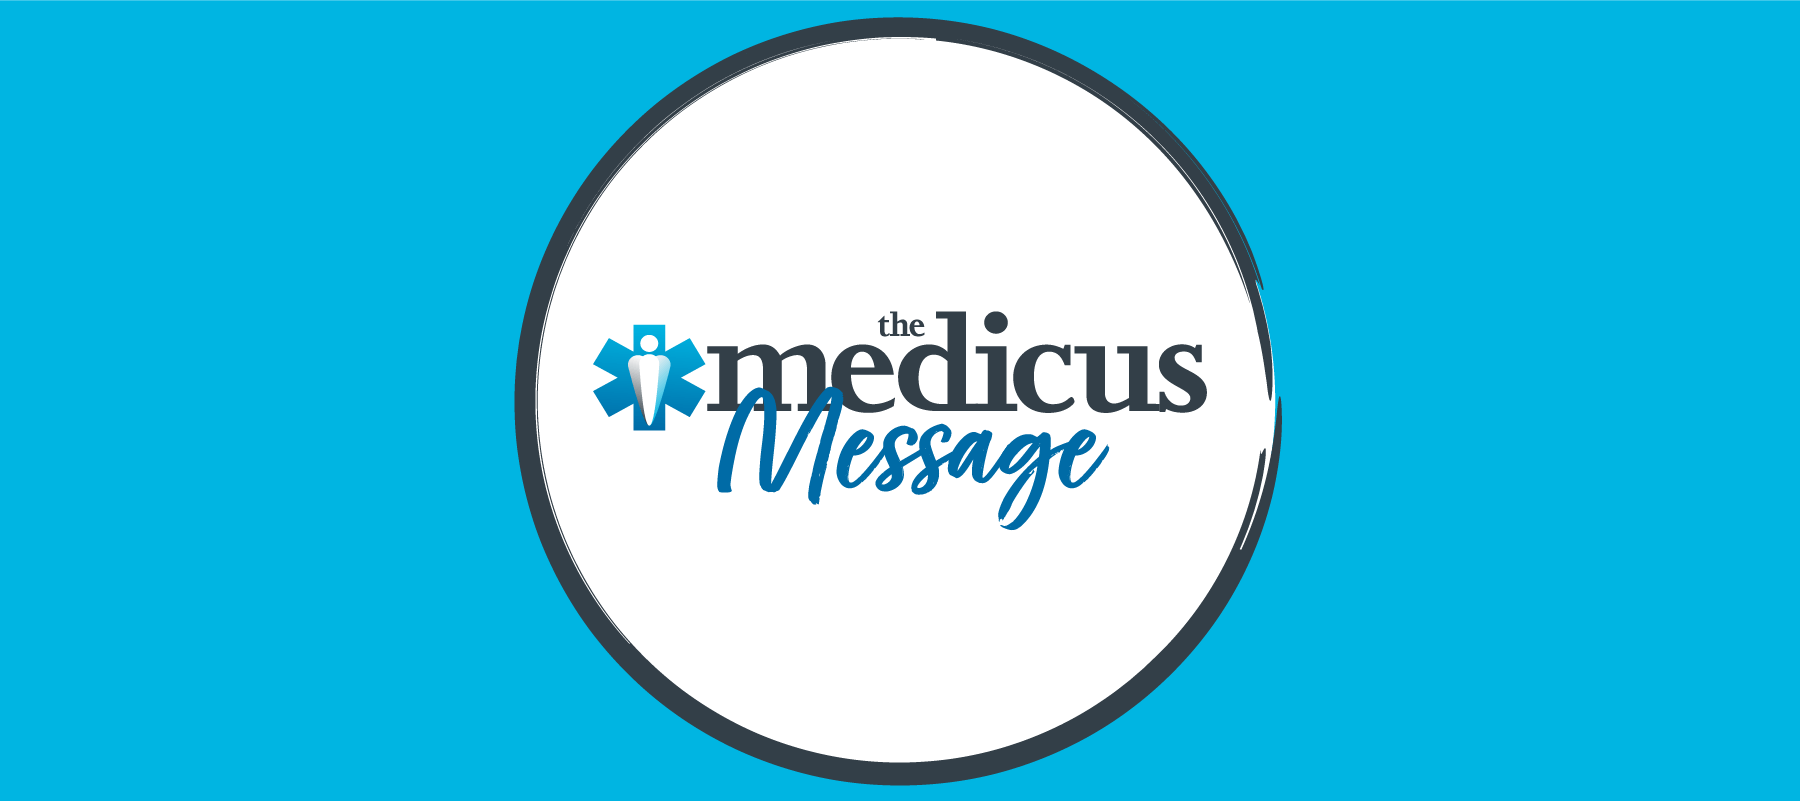 MedicusMessage